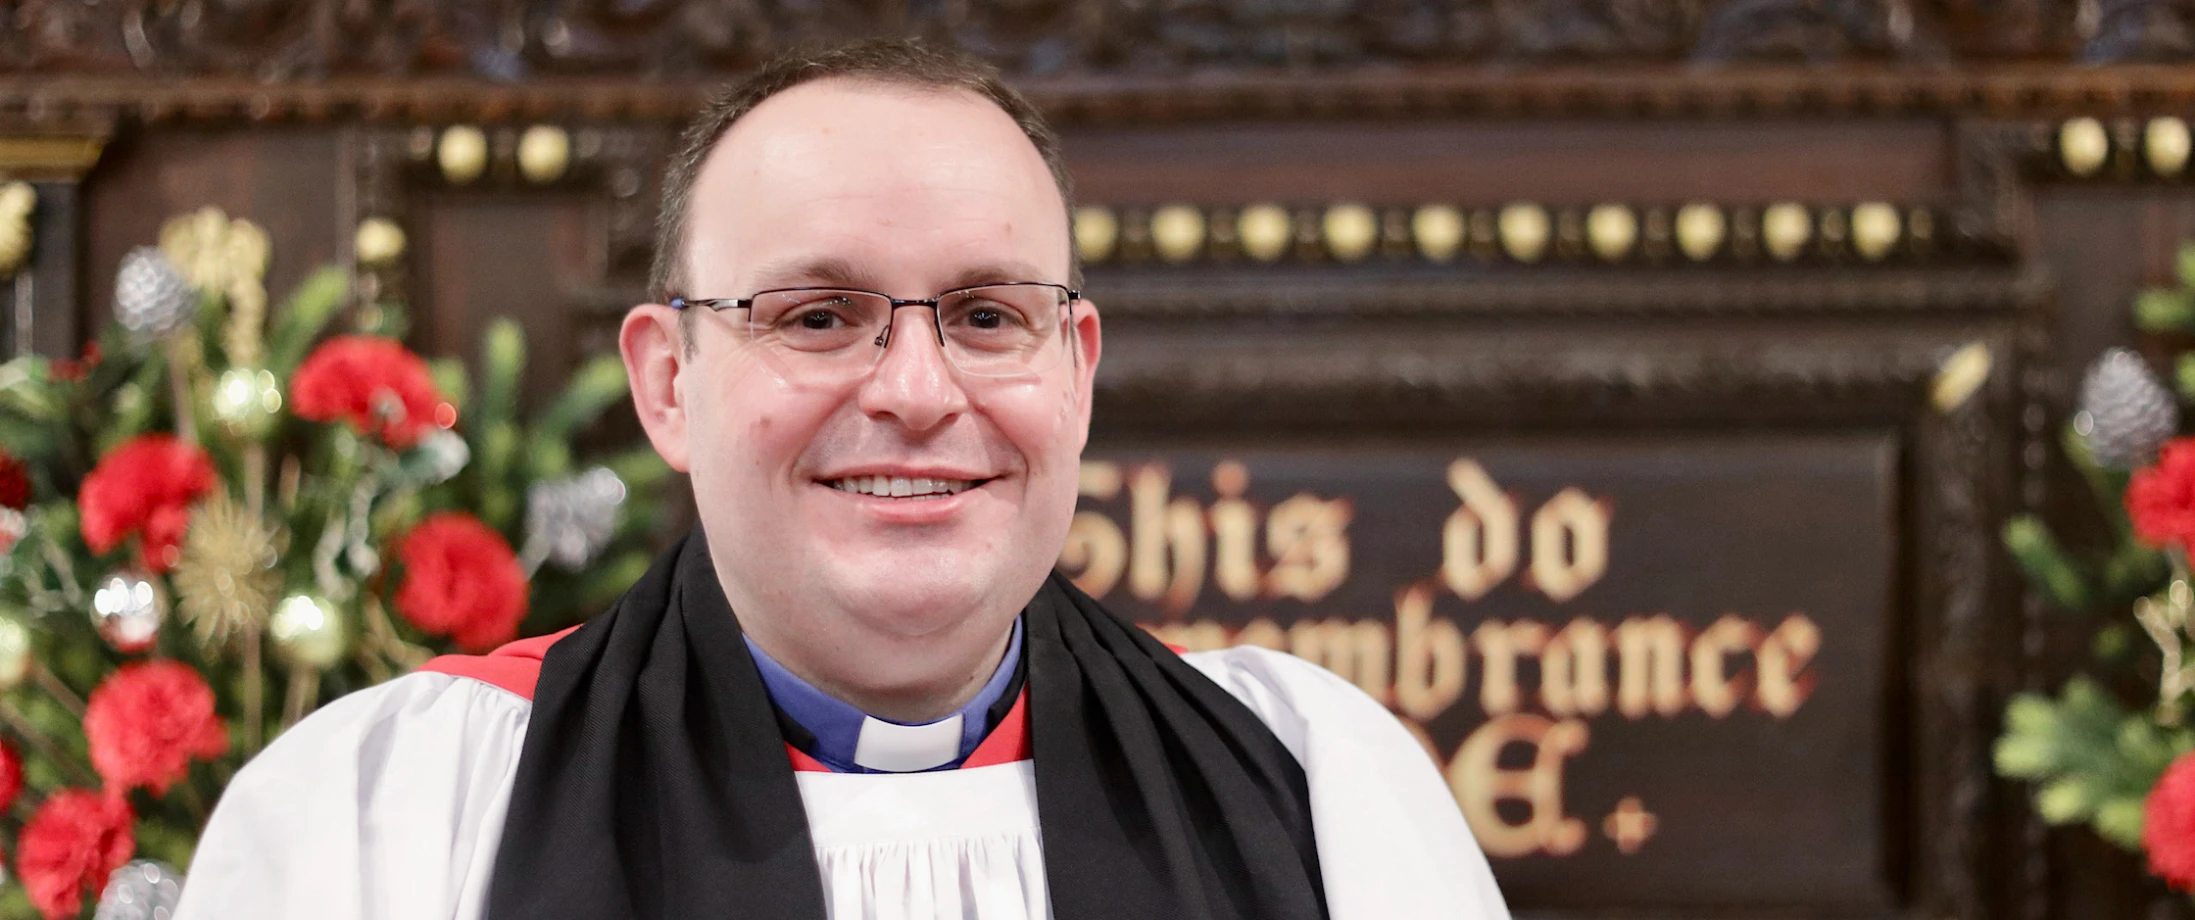 Donaghcloney Parish welcomes a new rector